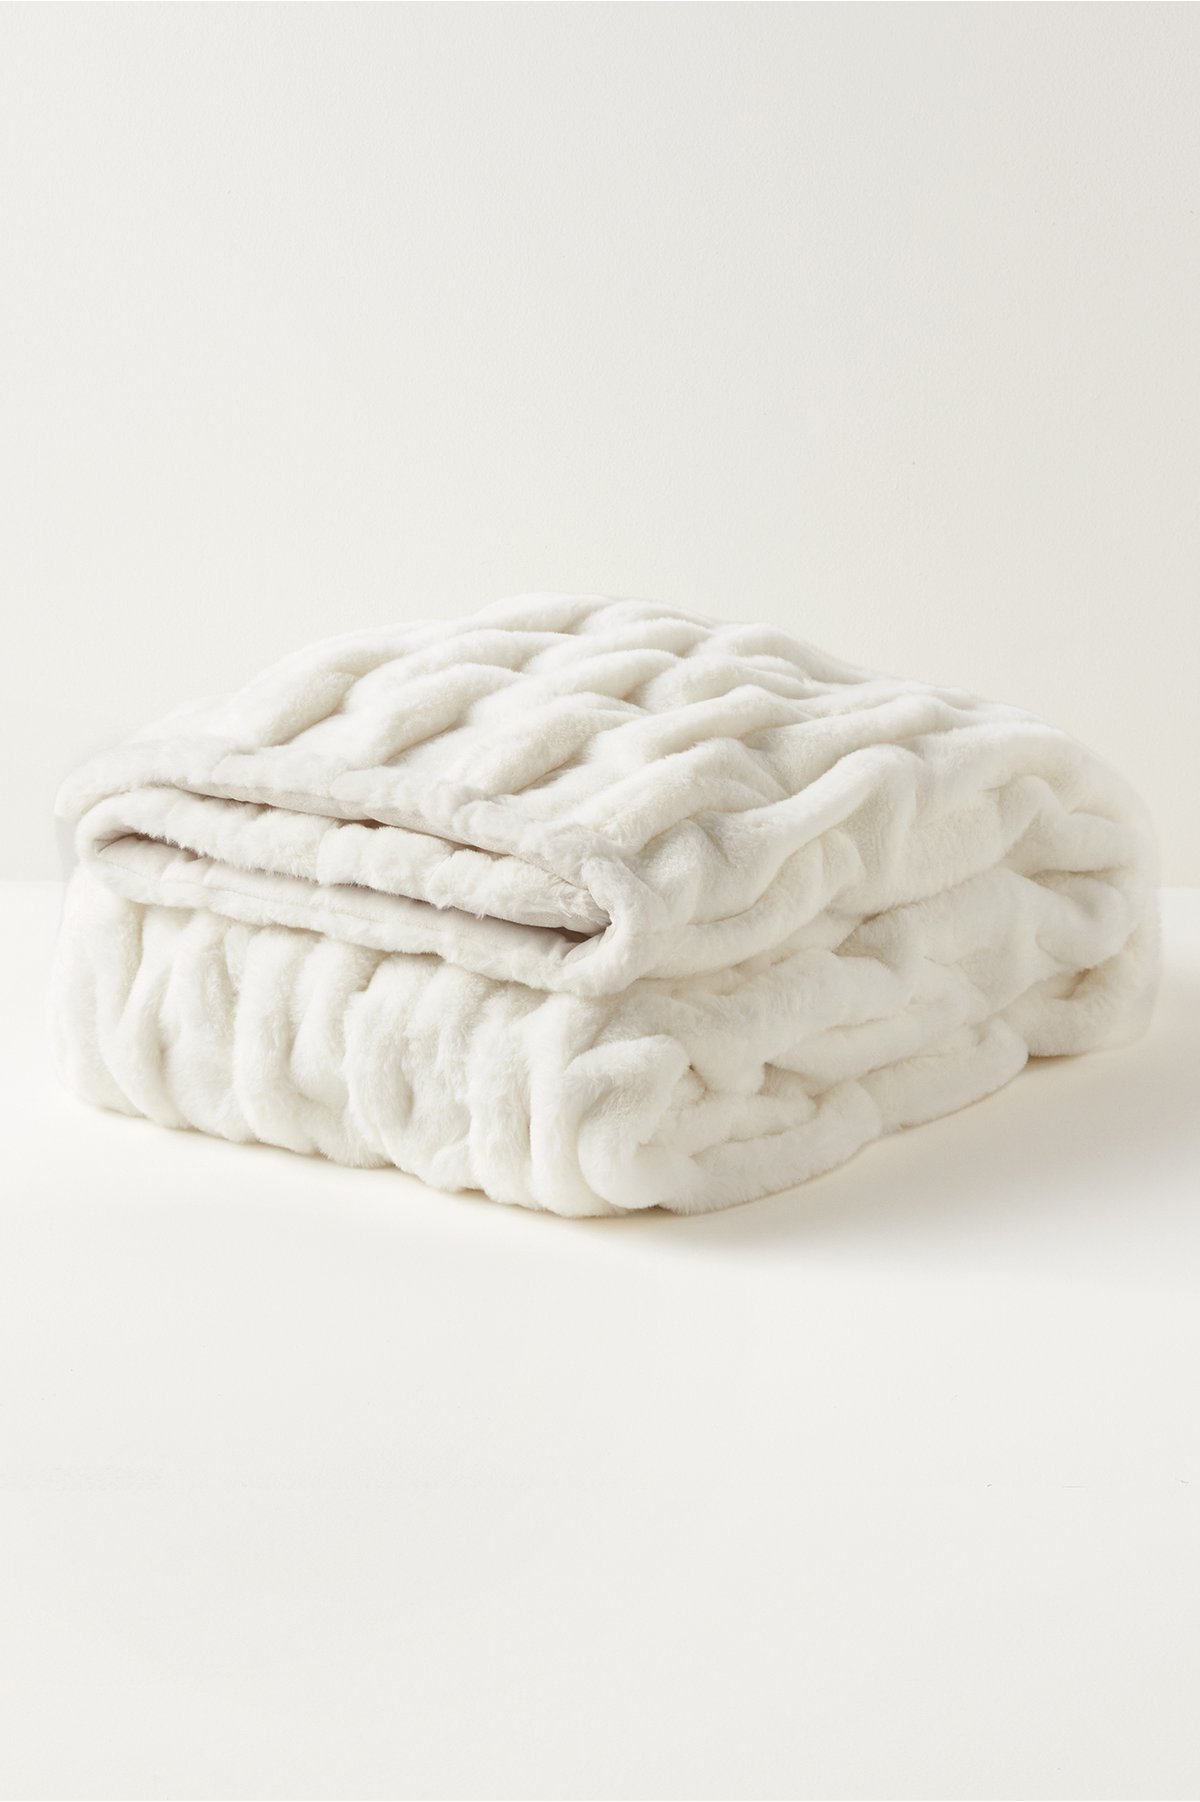 La Parisienne Faux Fur Throw Blanket by Soft Surroundings, in Ivory